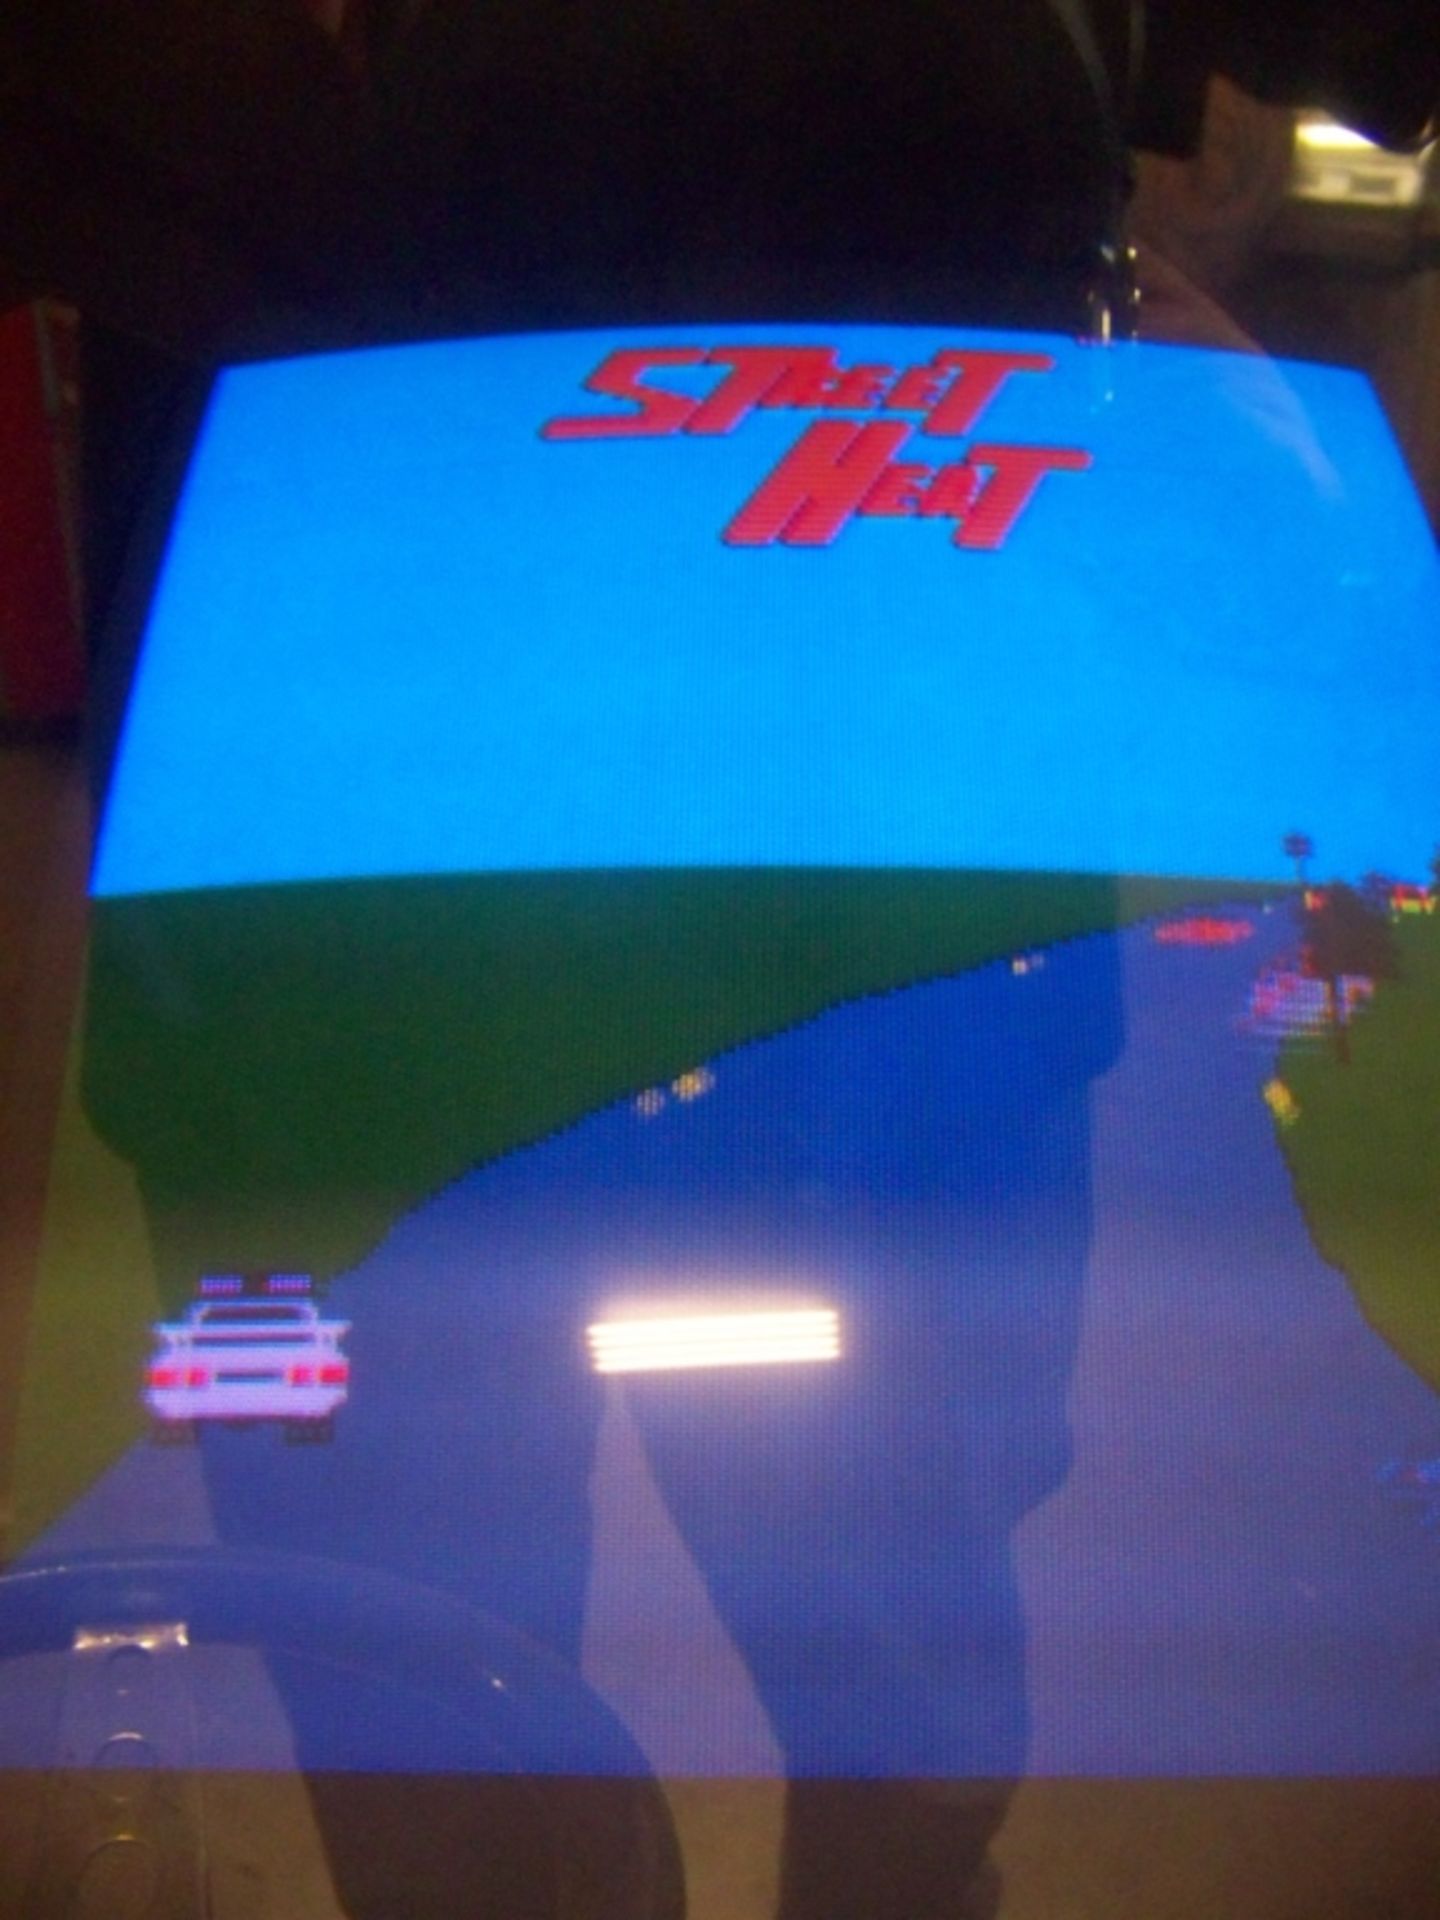 STREET HEAT DRIVER ARCADE GAME NINTENDO CABINET - Image 3 of 4